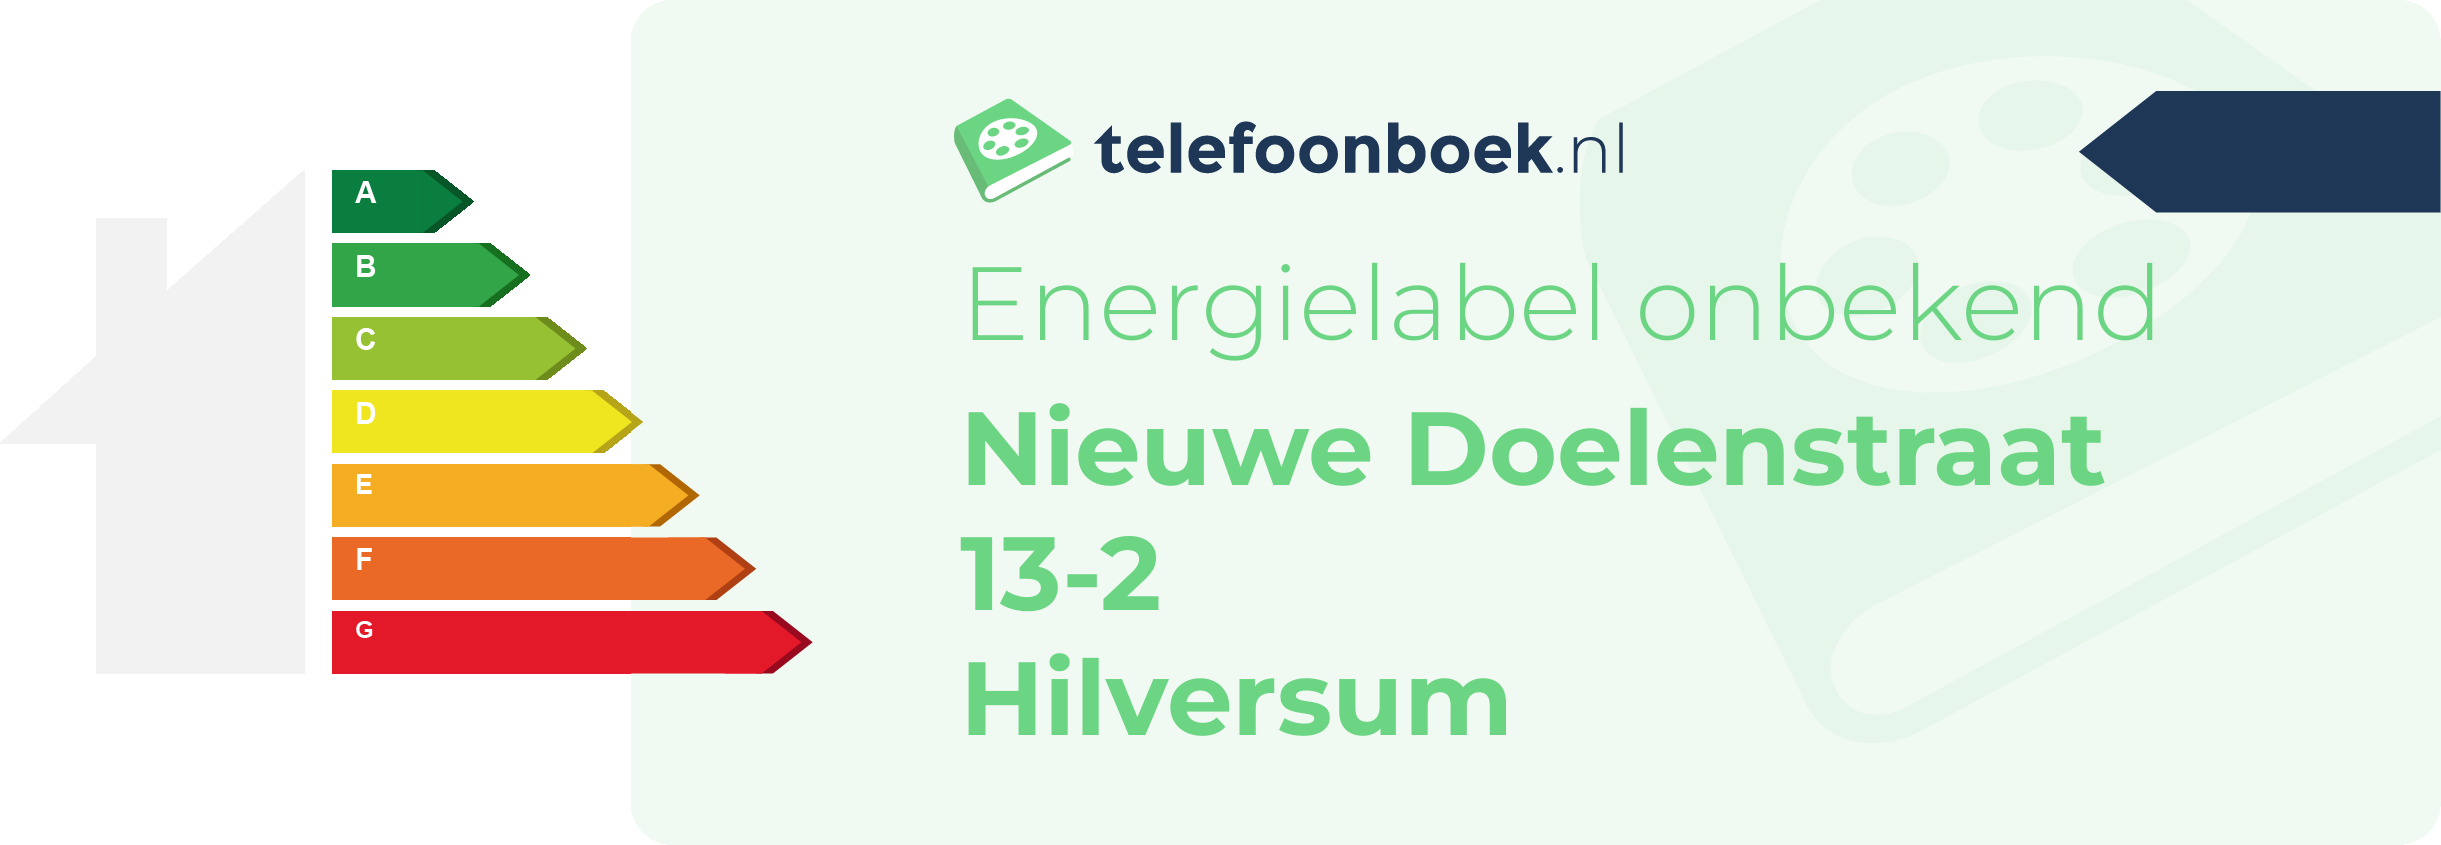 Energielabel Nieuwe Doelenstraat 13-2 Hilversum